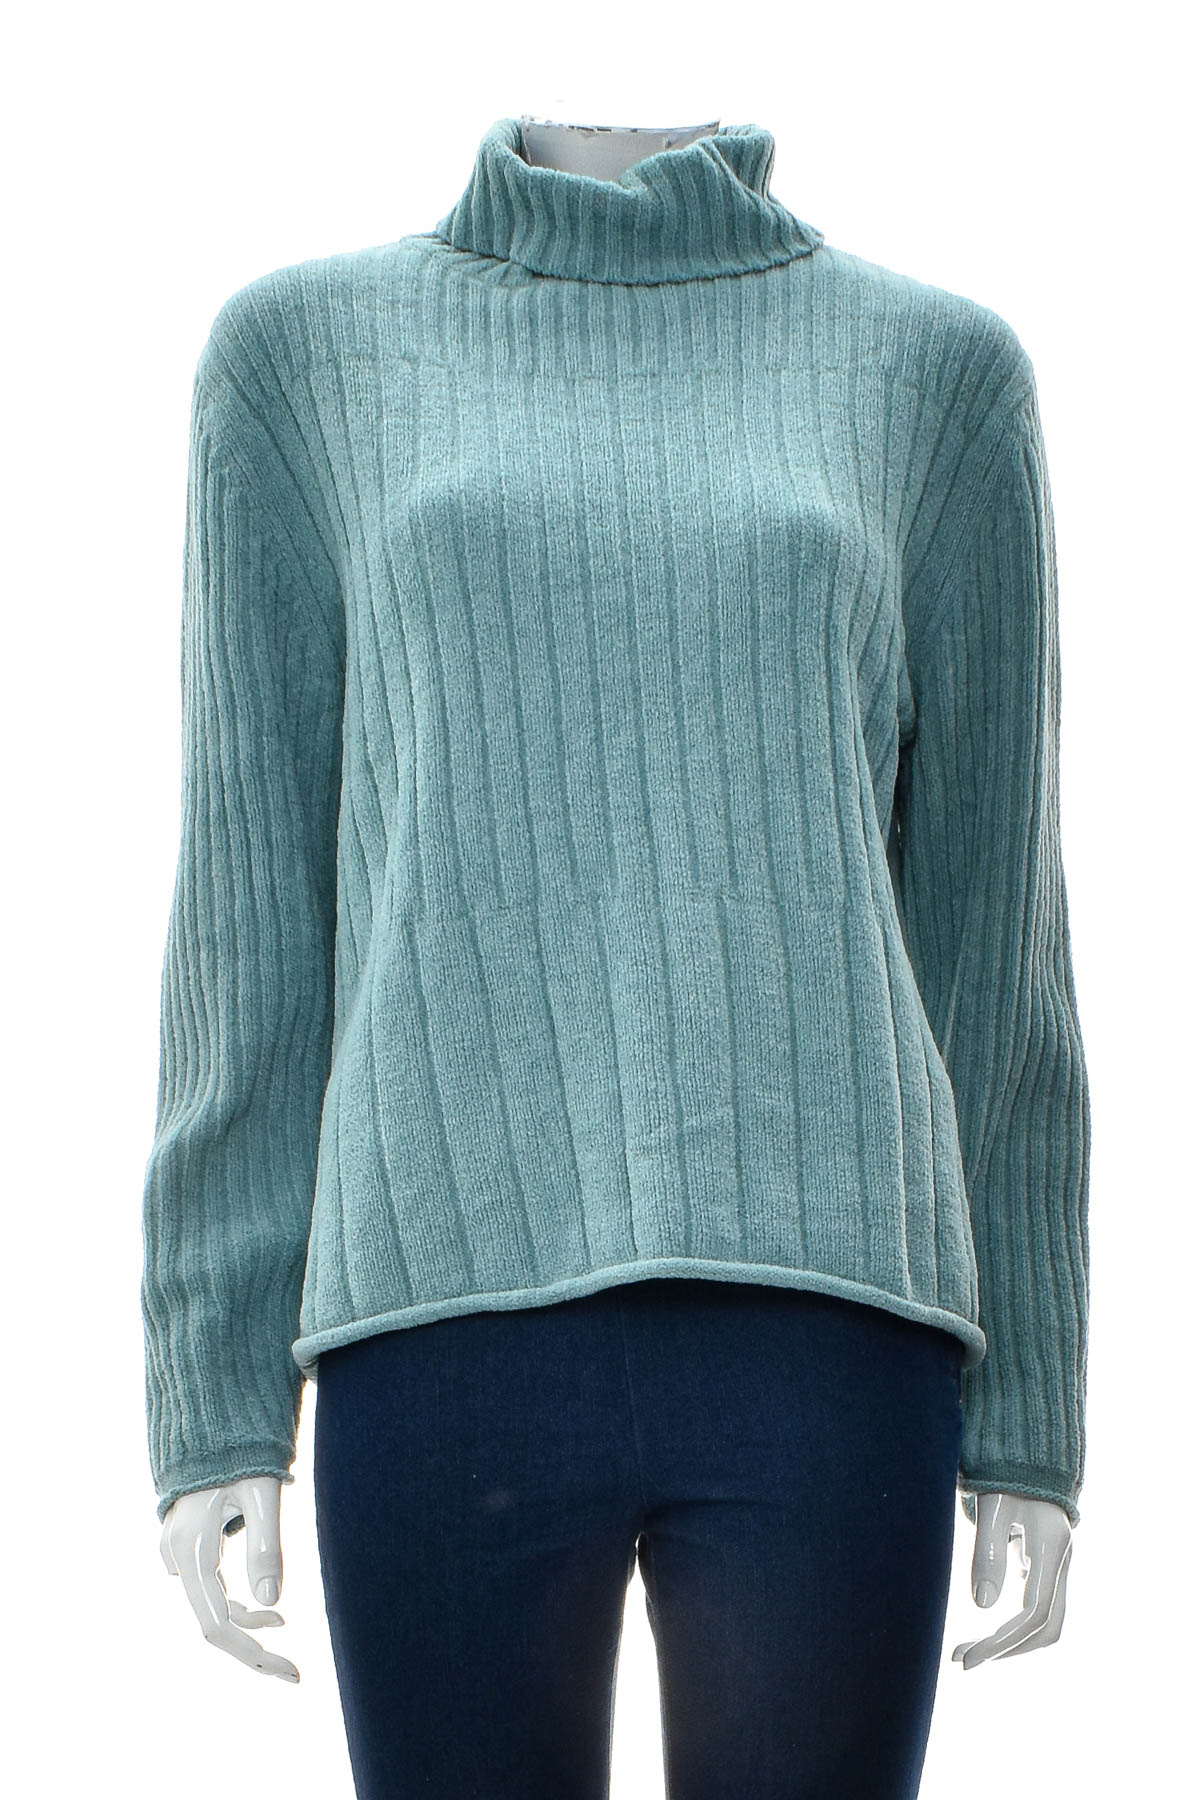 Women's sweater - SONOMA LIFE + STYLE - 0